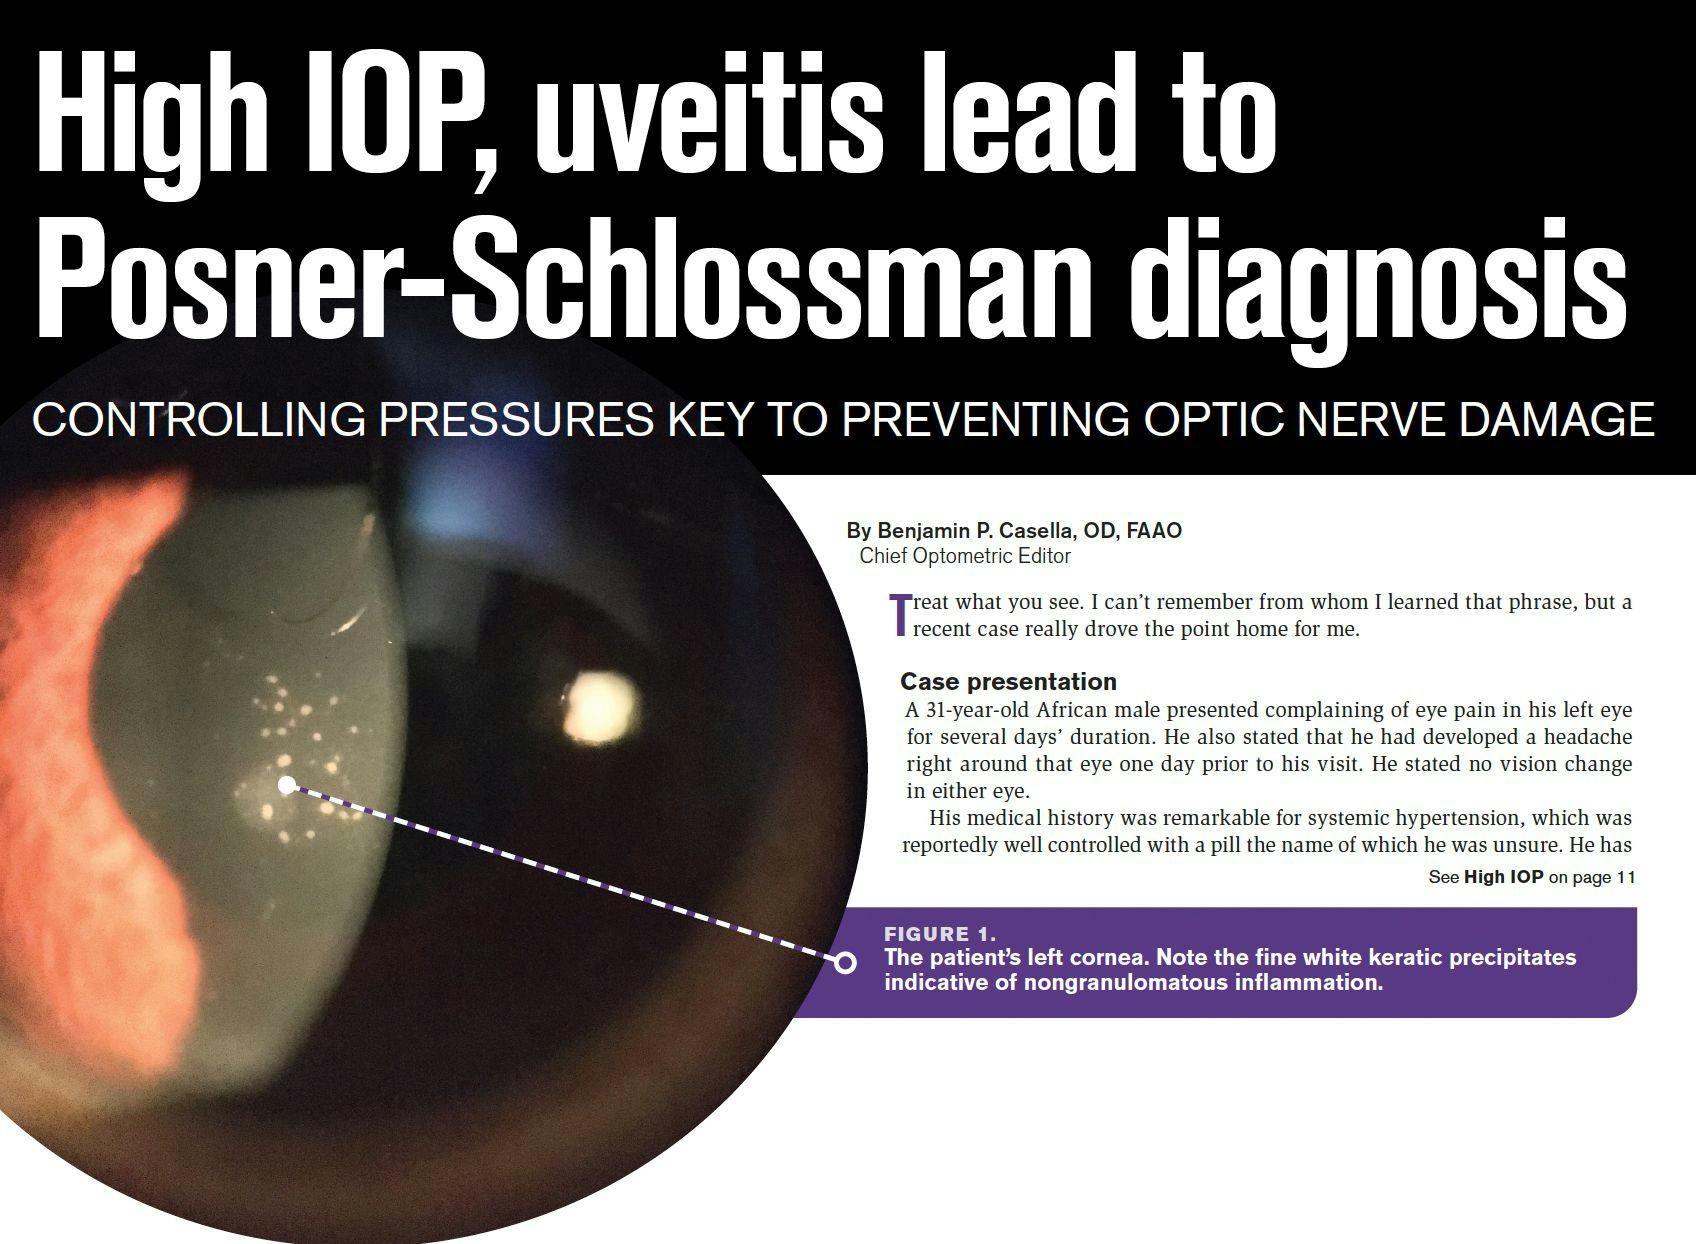 High IOP, uveitis lead to Posner-Schlossman diagnosis